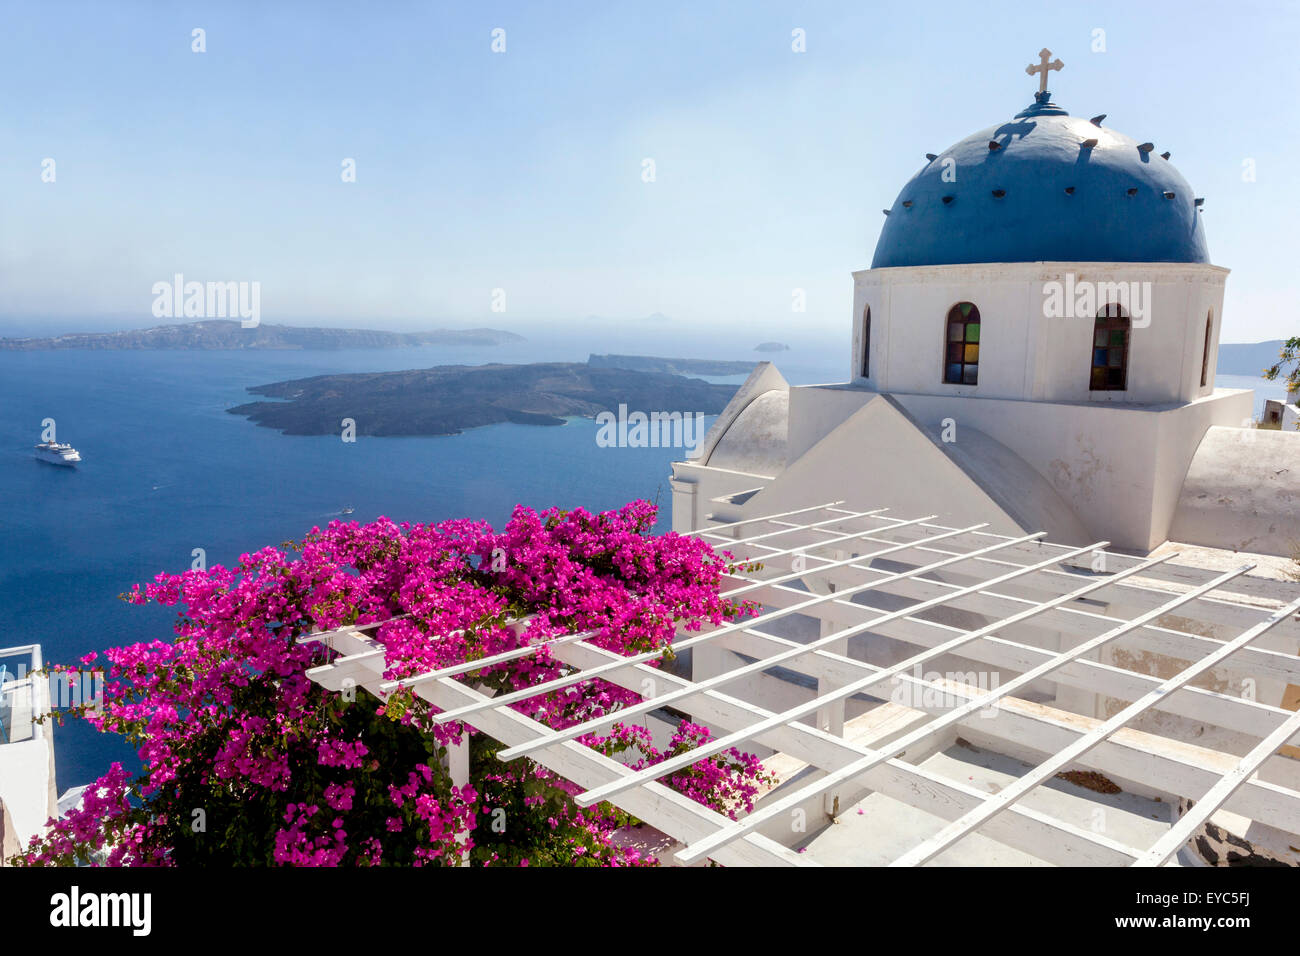 Imerovigli, Santorini Blaue Kuppel Kirche Kykladen Inseln, Griechische Inseln, Griechenland Bougainvillea auf der Terrasse Pergola Europa Stockfoto